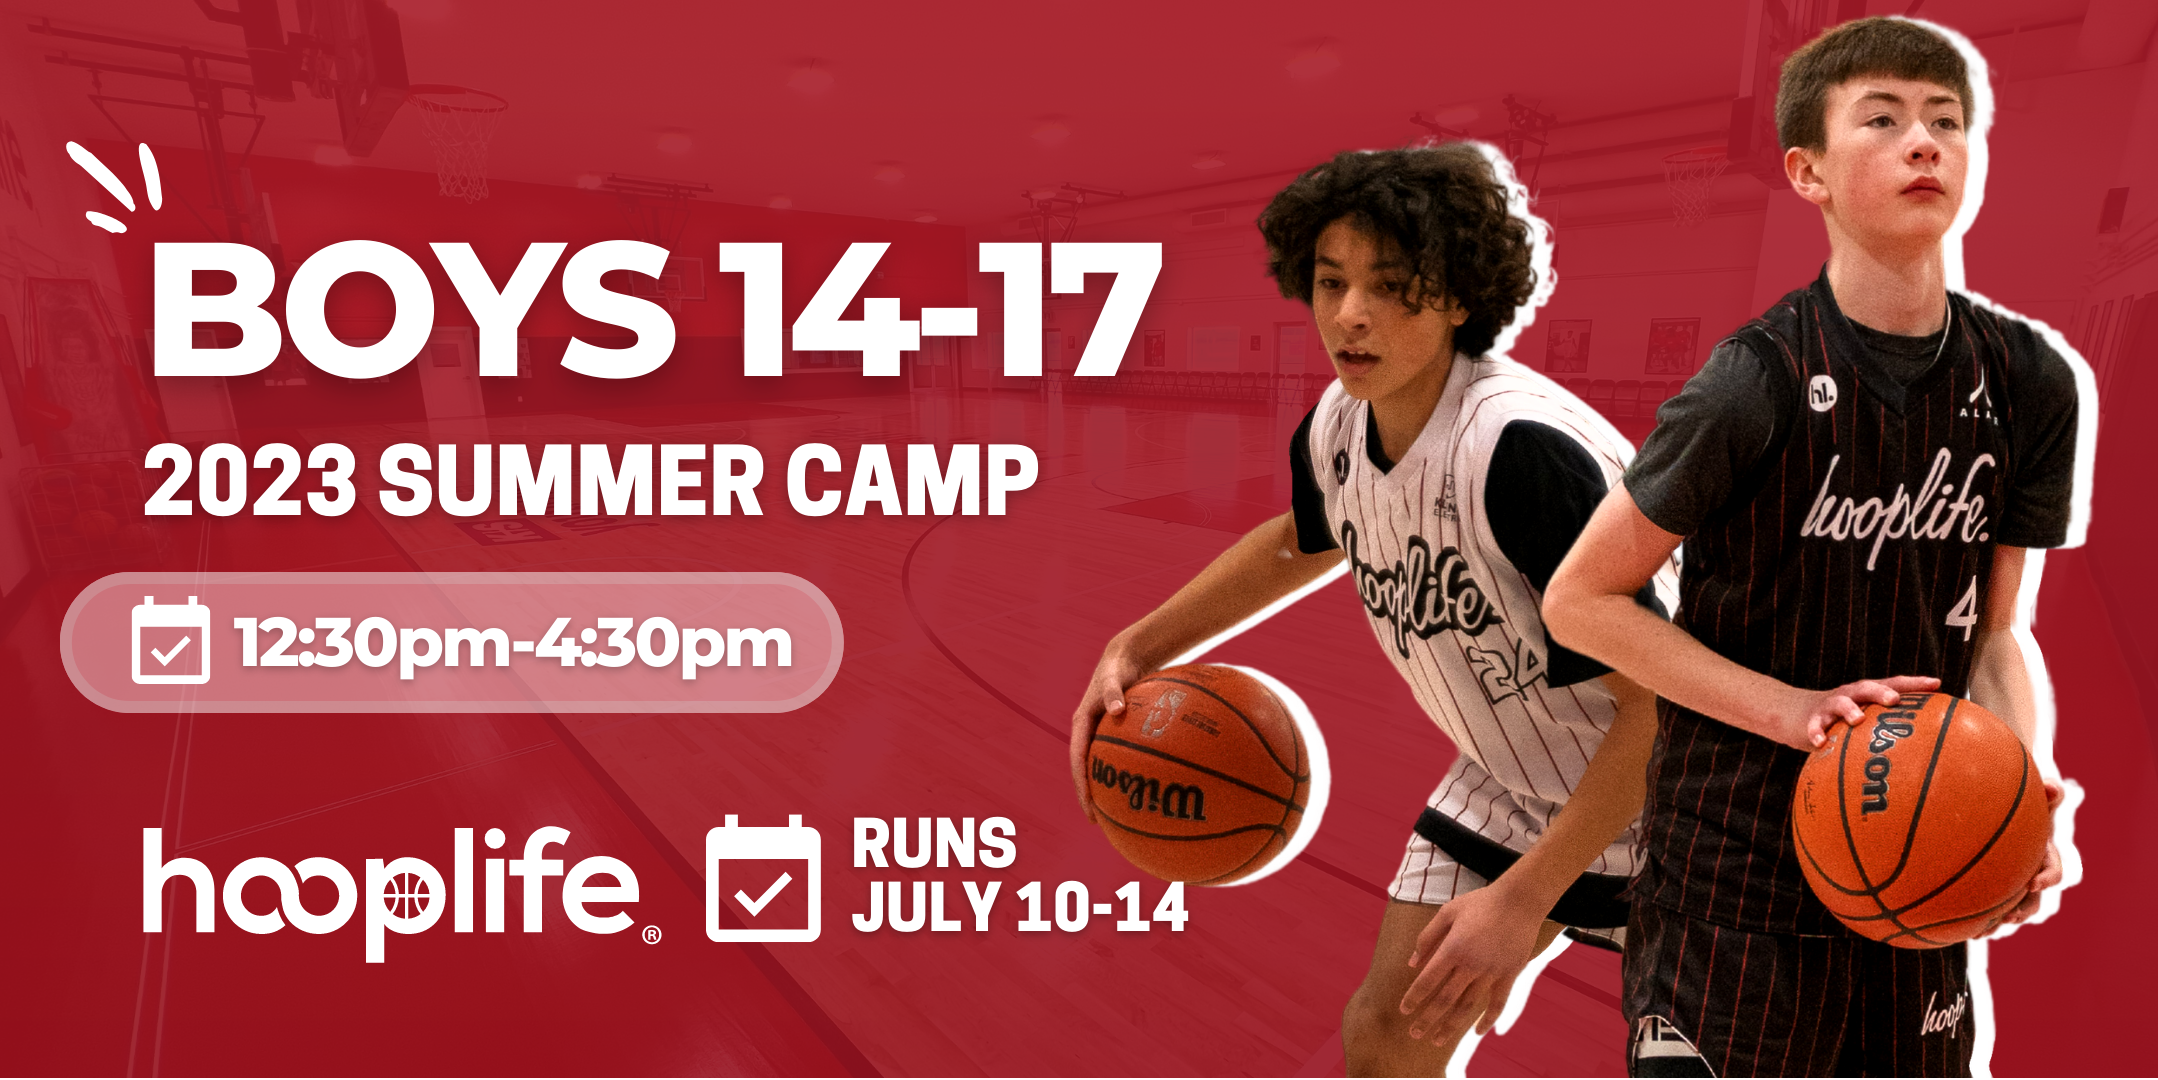 Boys 14-17 Summer Camp | July 10-14